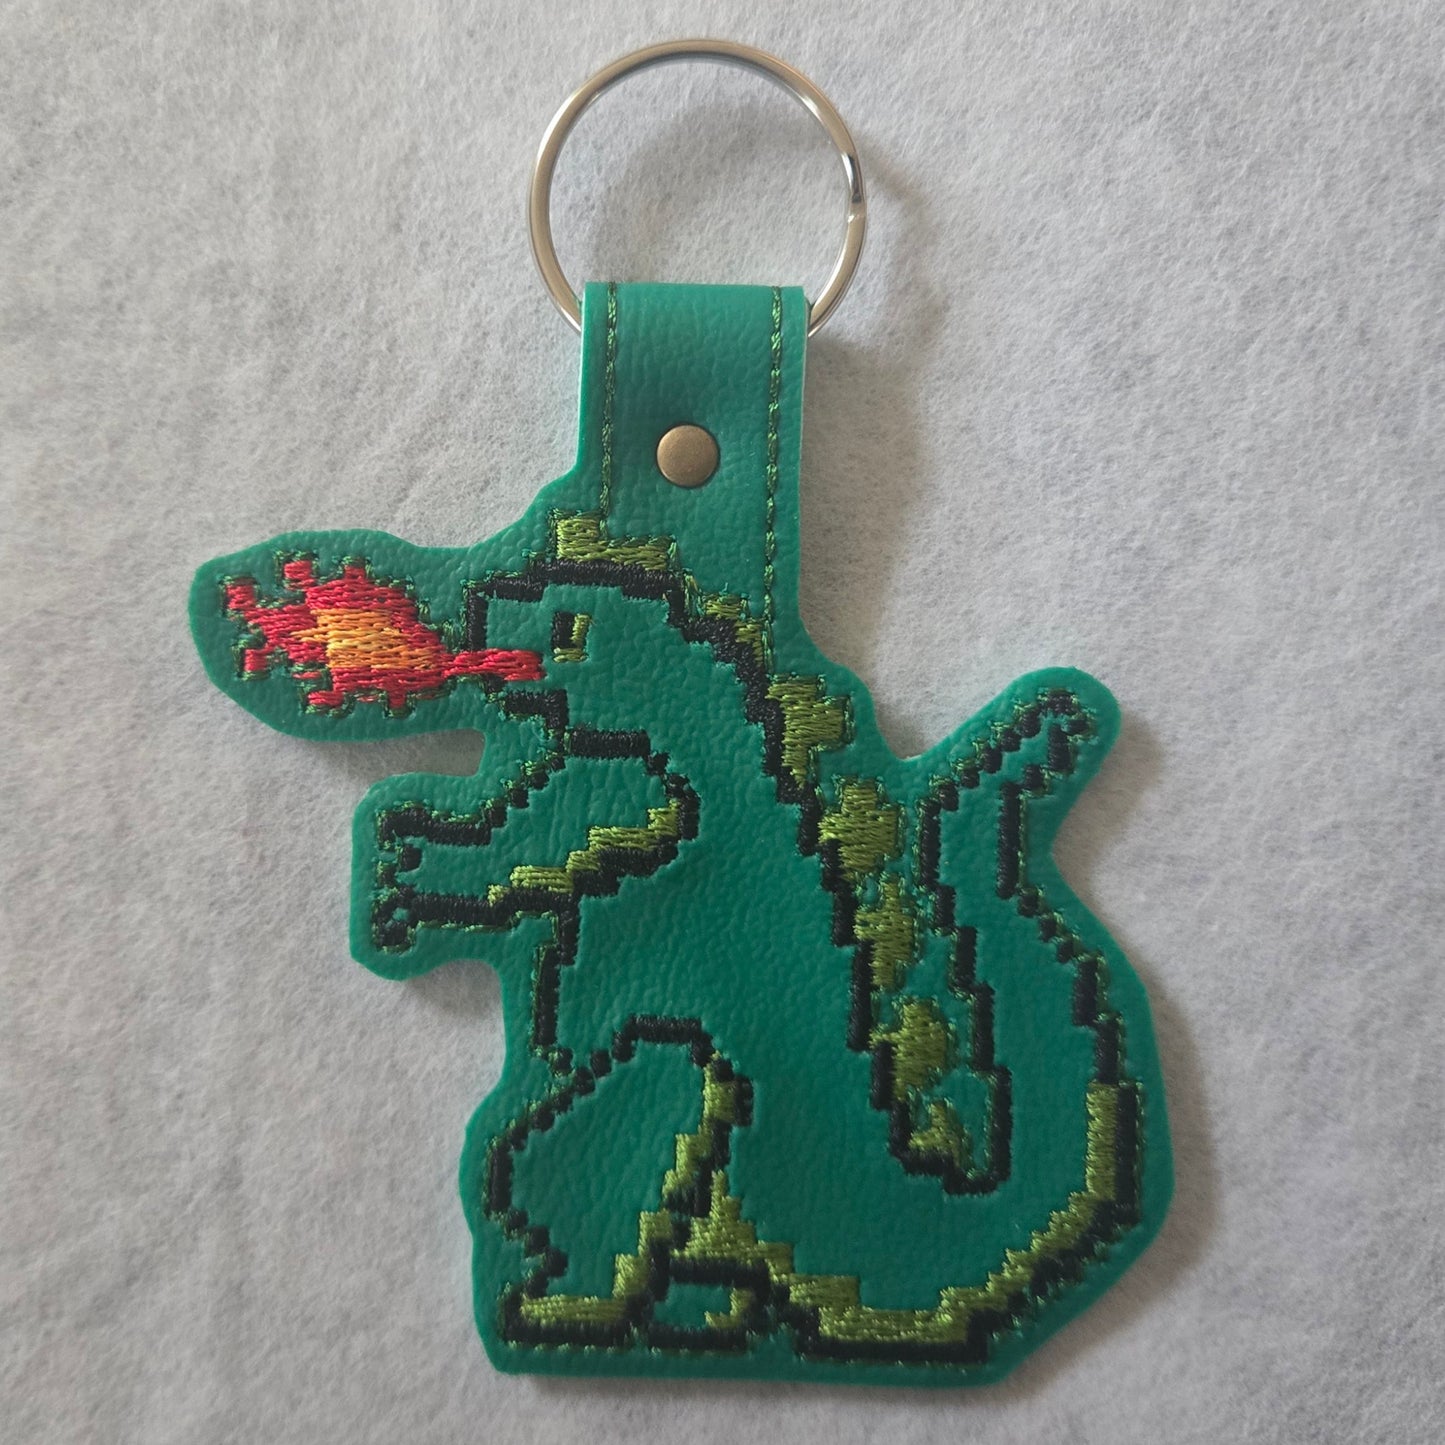 8-bit Large Green Monster Embroidered Vinyl Key Ring